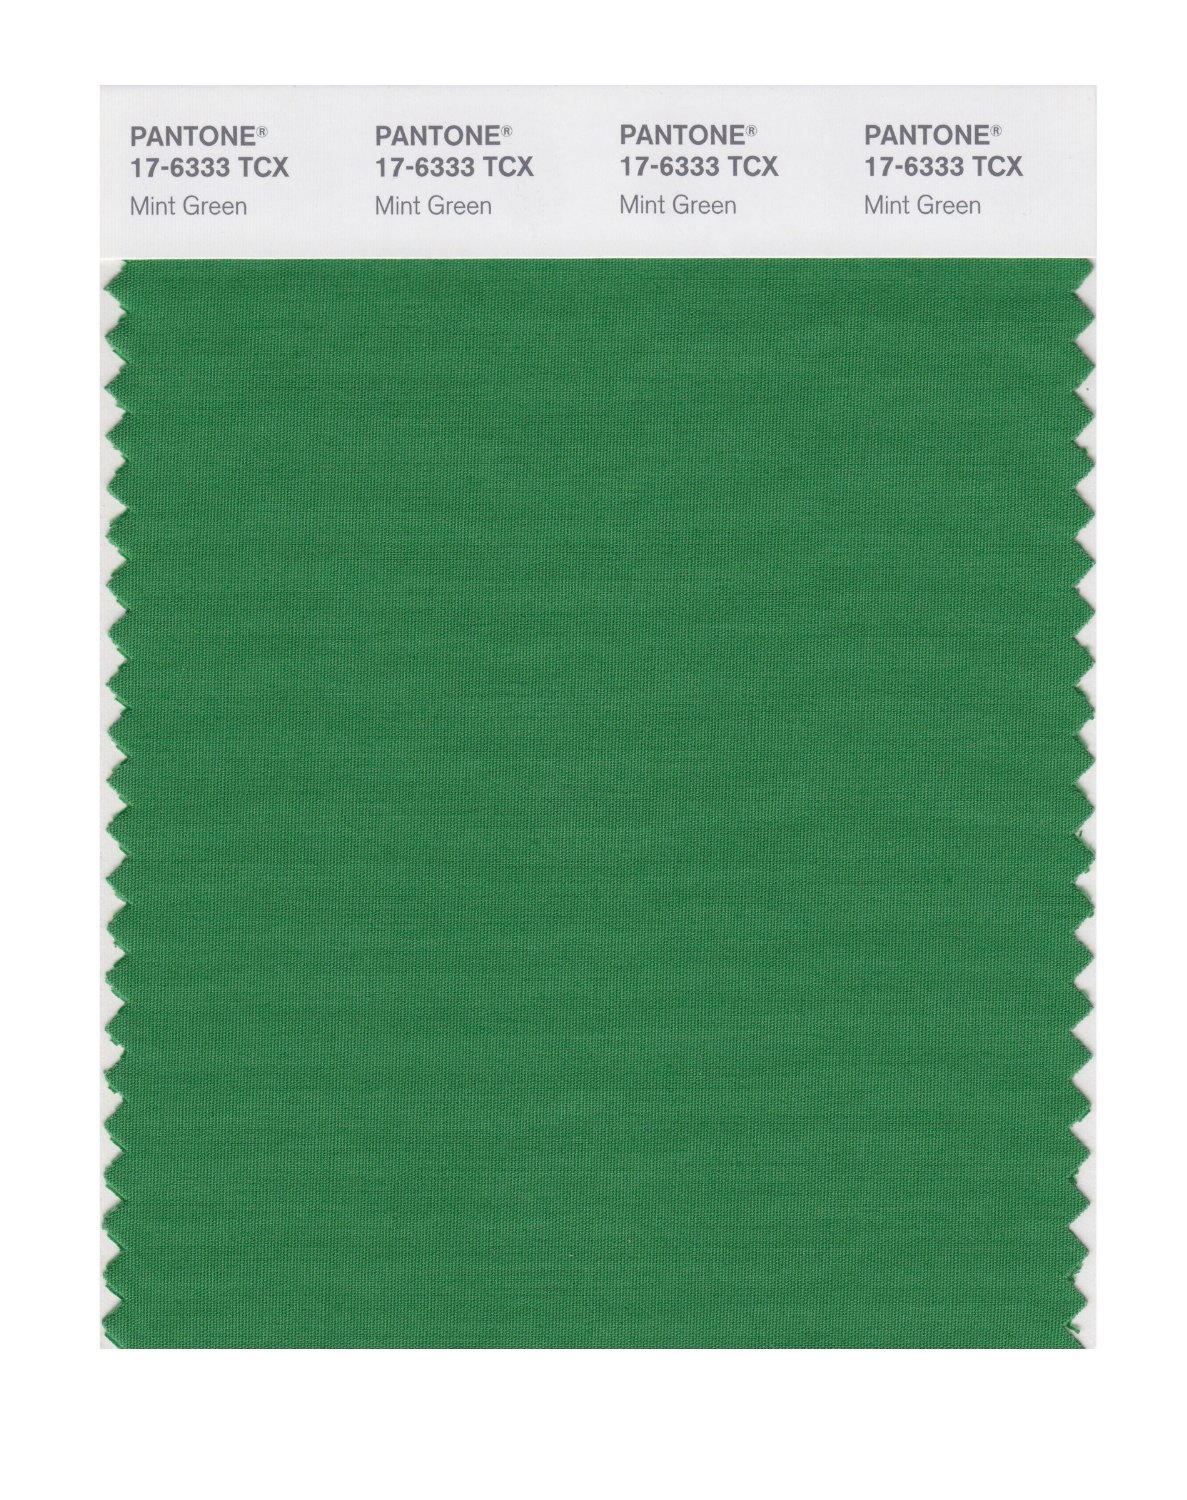 Pantone Cotton Swatch 17-6333 Mint Green